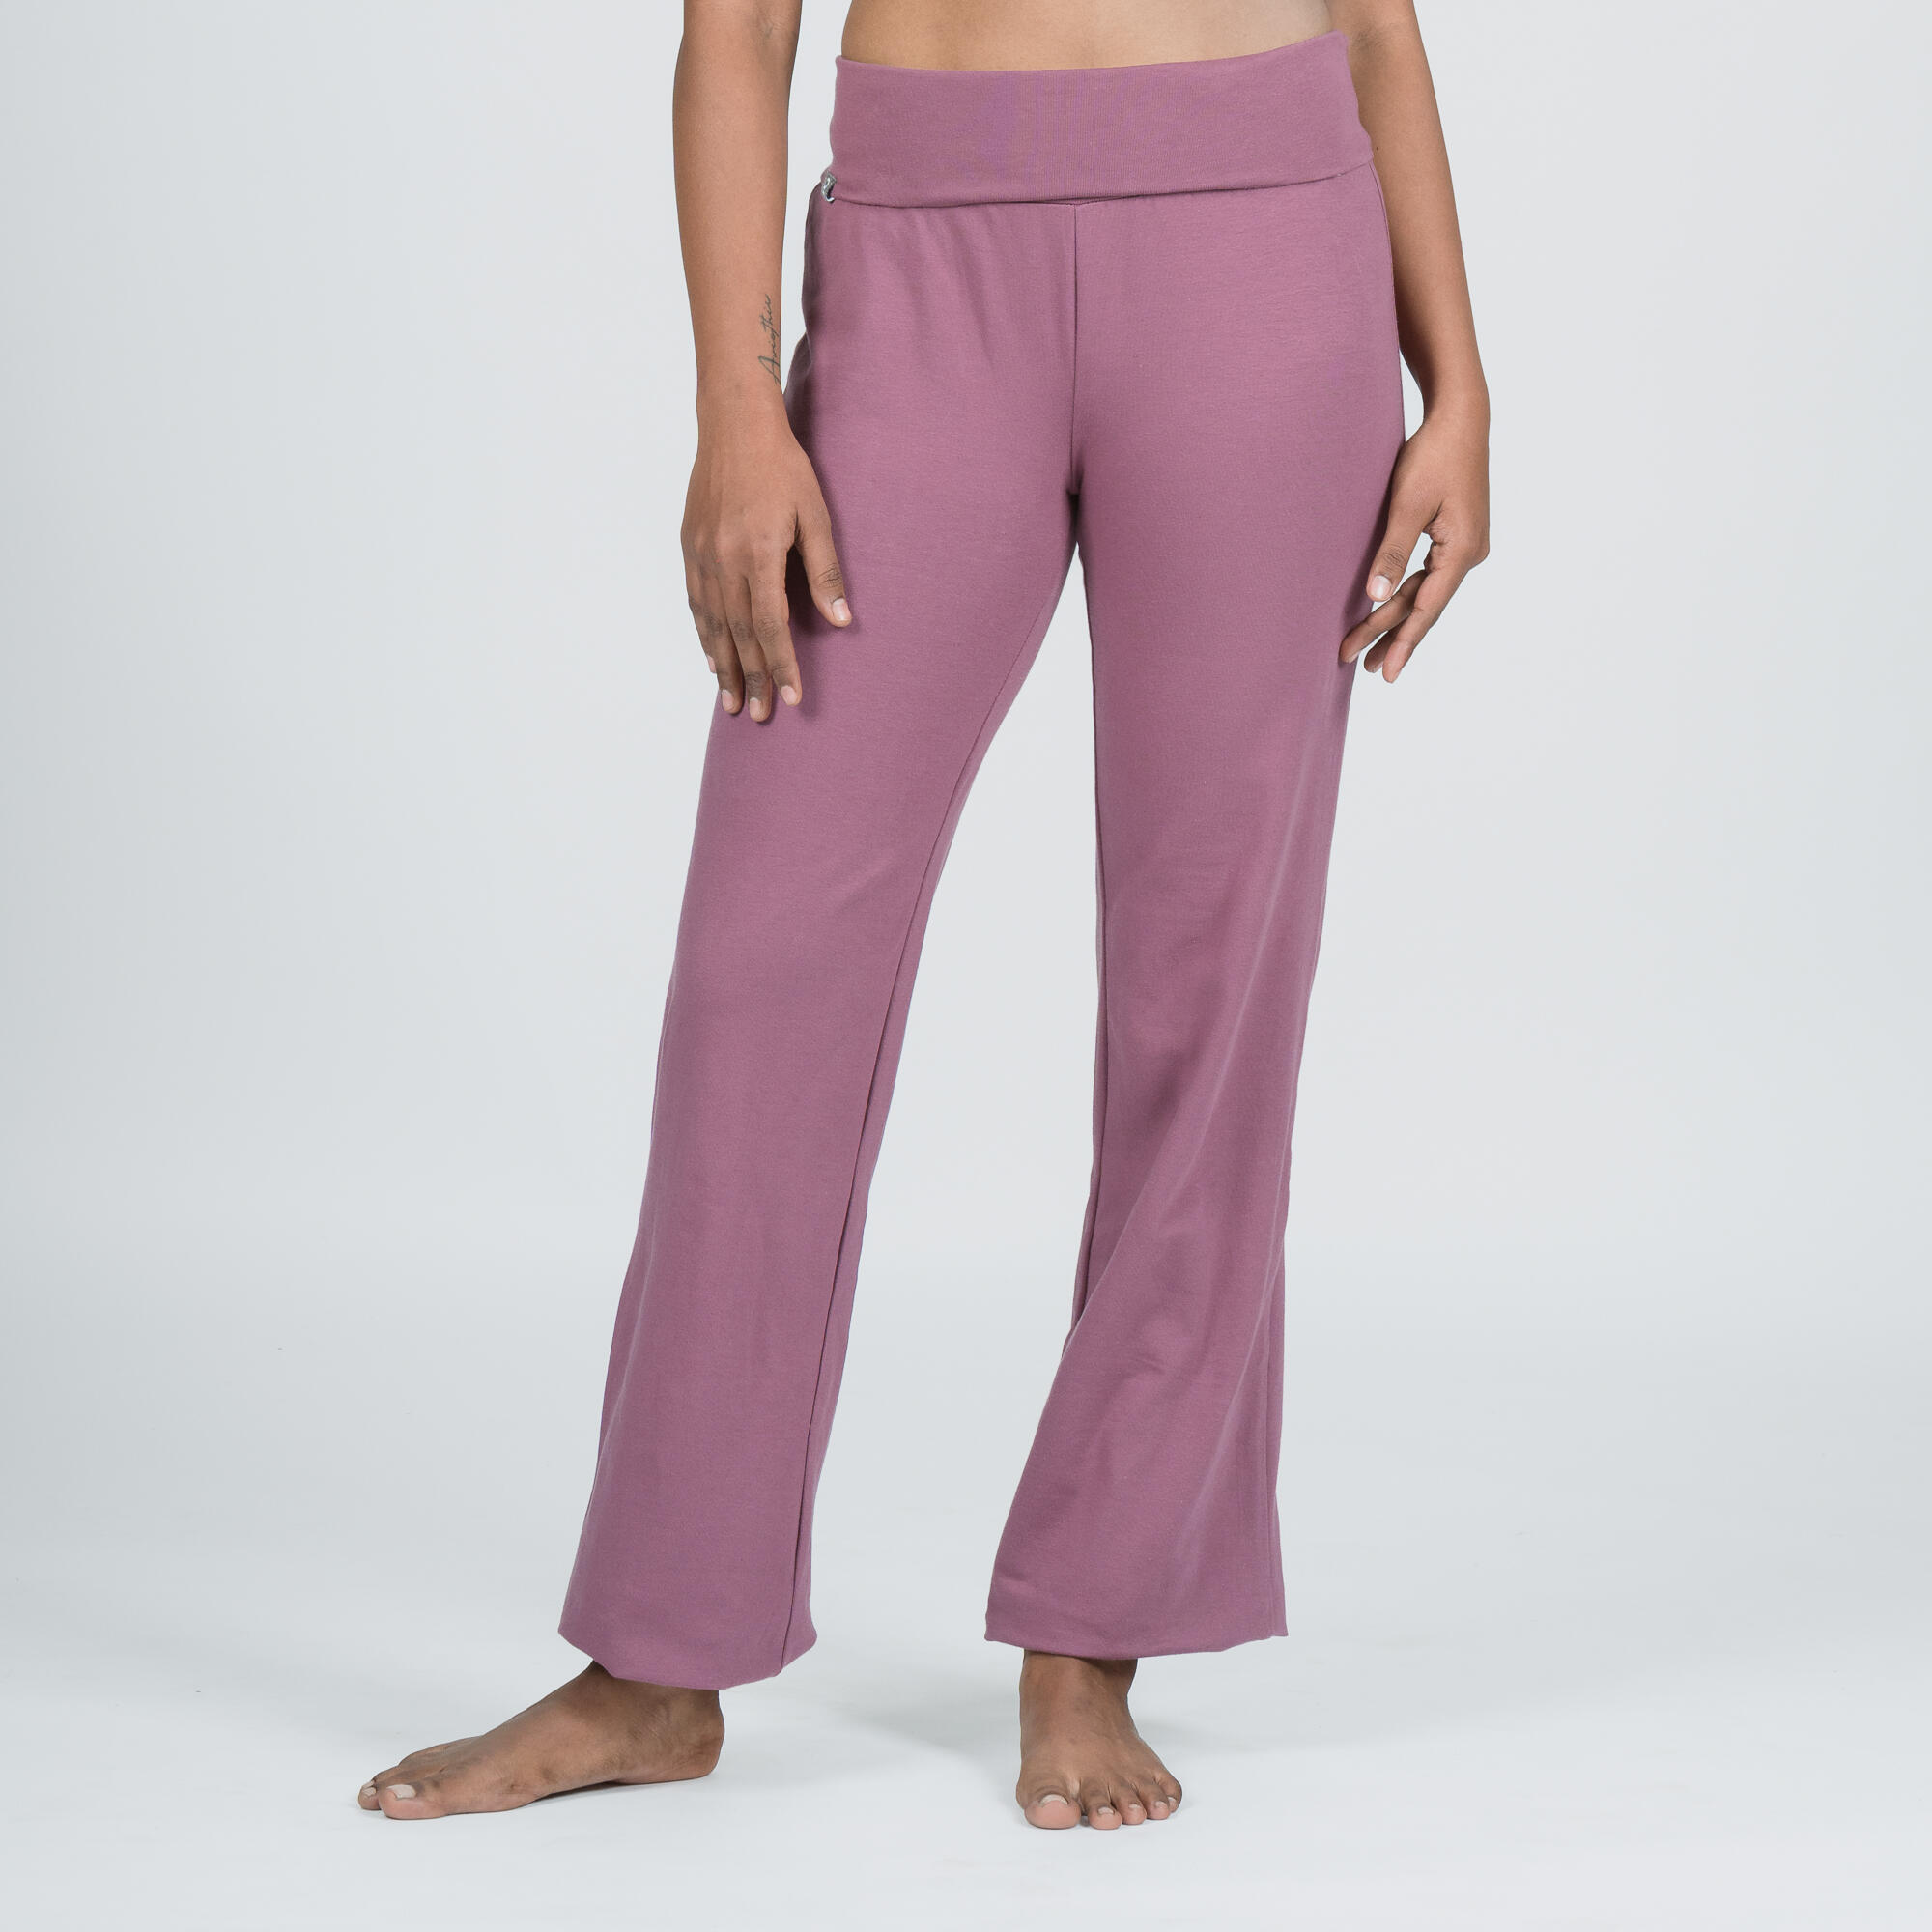 Buy Nite Flite Black Cotton Yoga Pants for Womens Online  Tata CLiQ